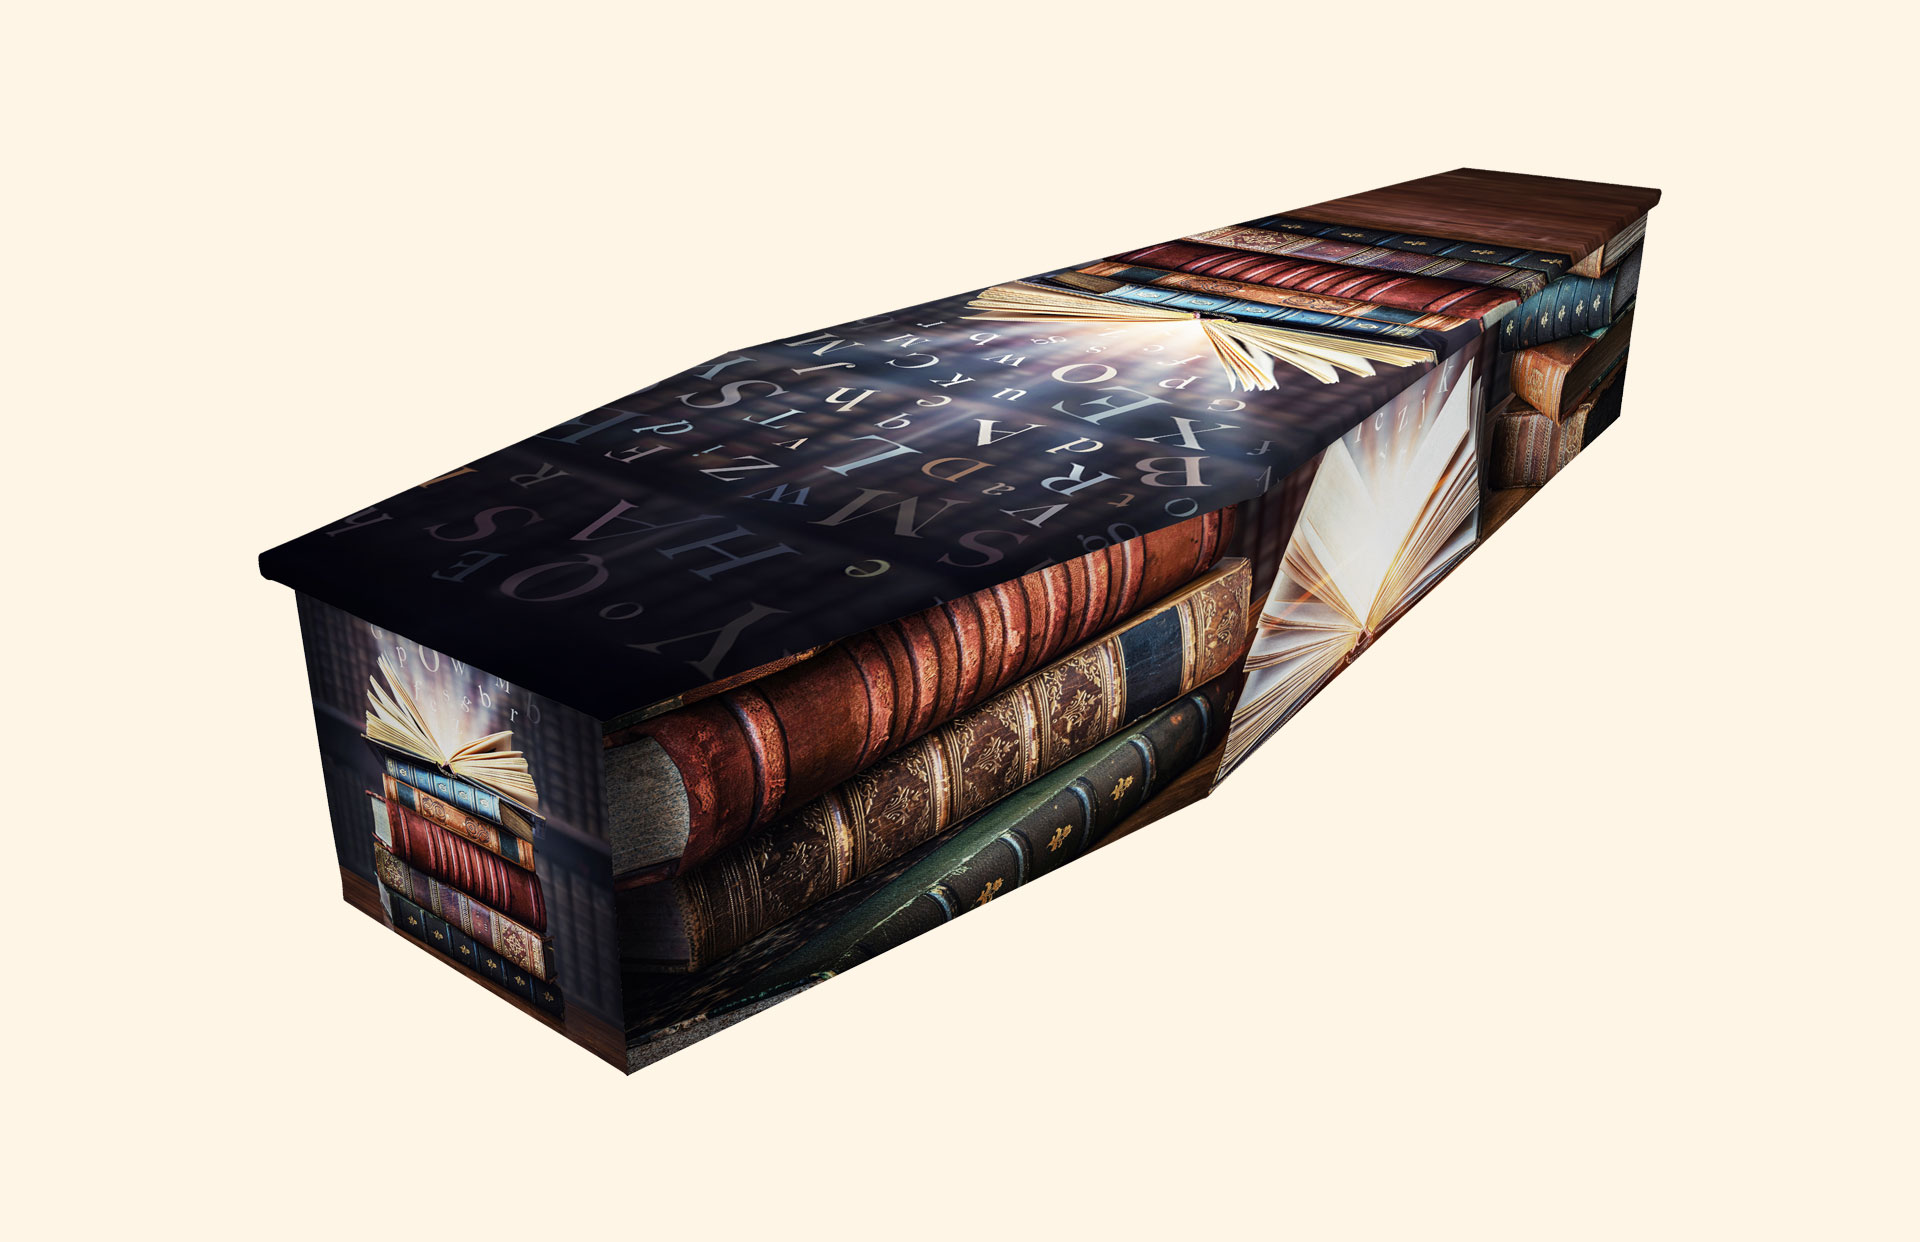 Book Fair design on a cardboard coffin